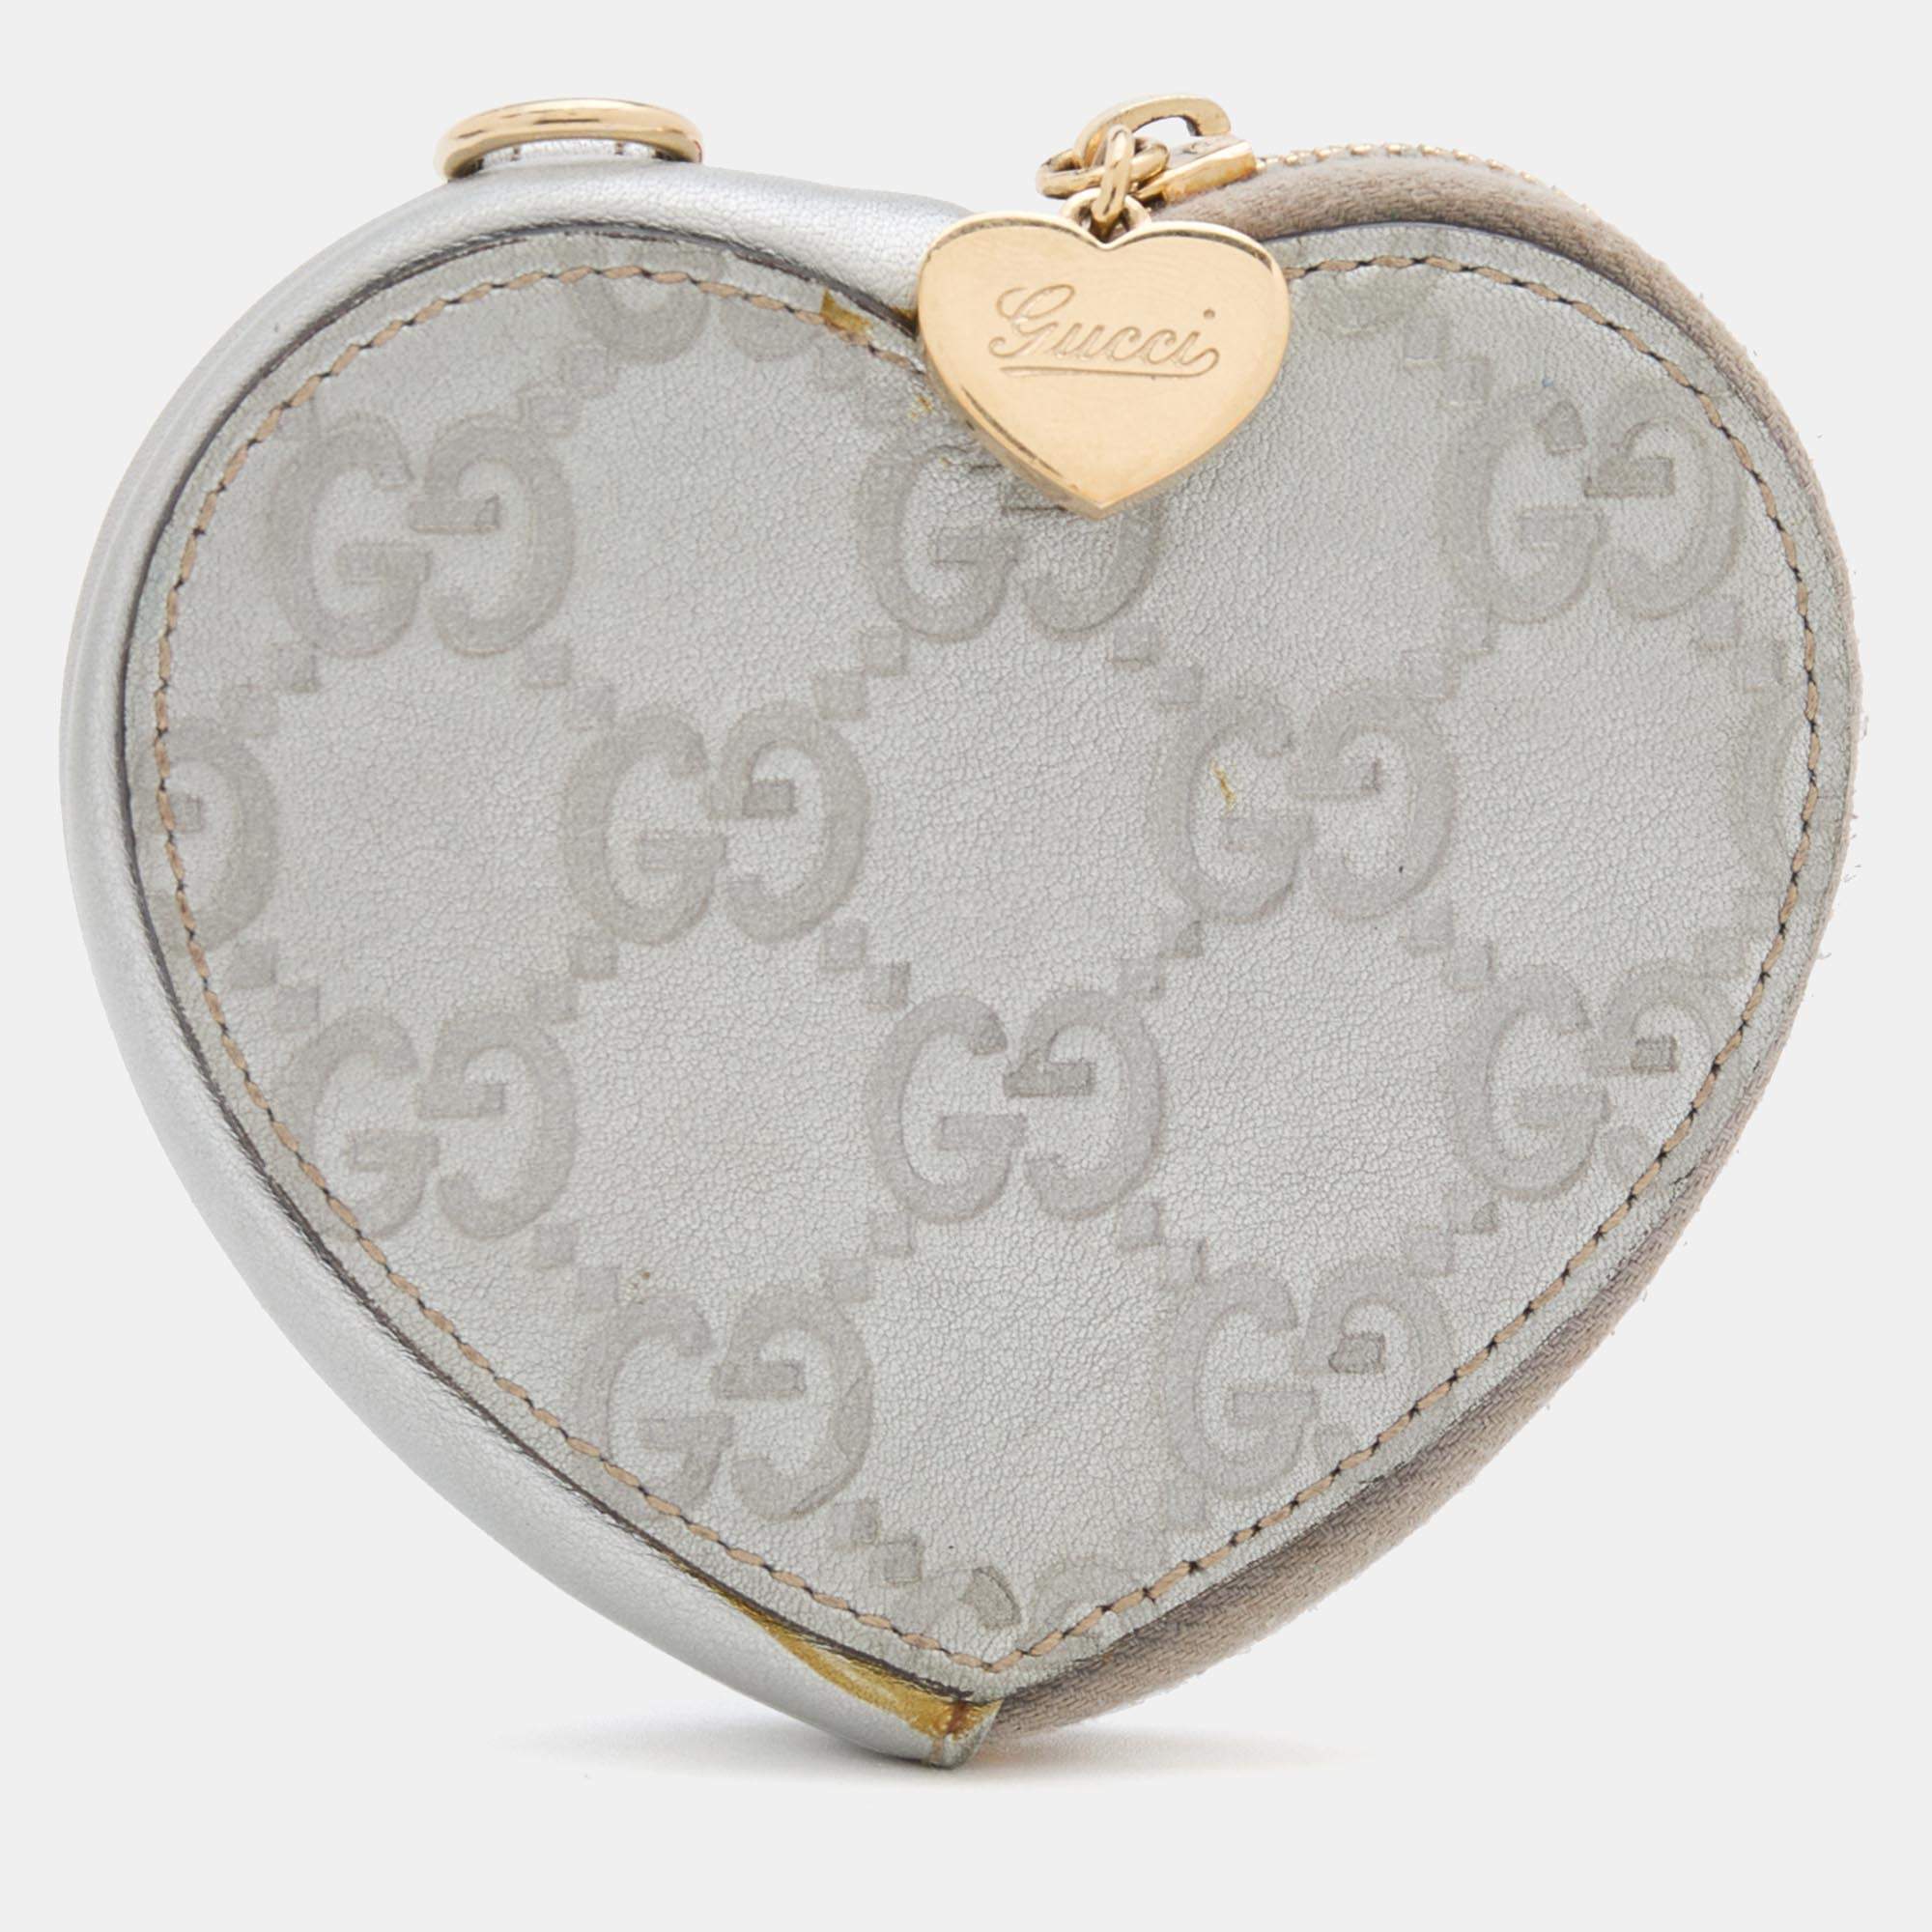 Gucci zip coin purse and keychain | Coin purse, Gucci, Handbags